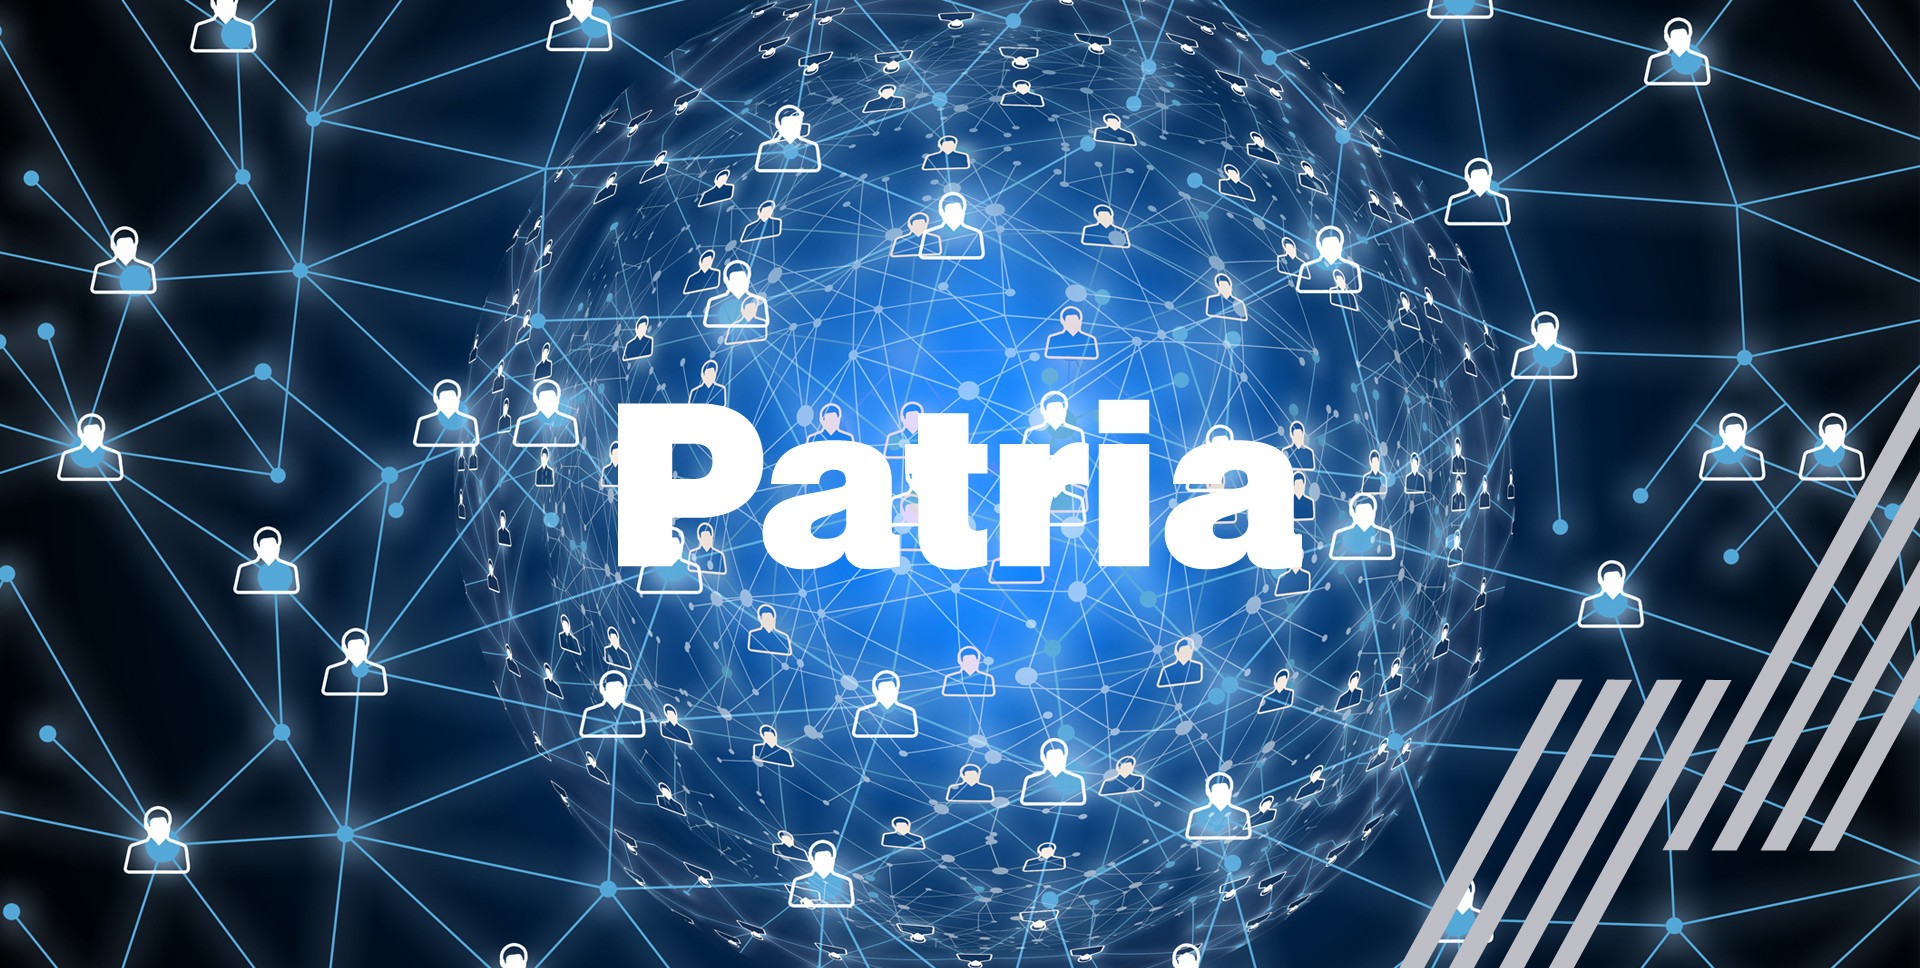 www.patriagroup.com